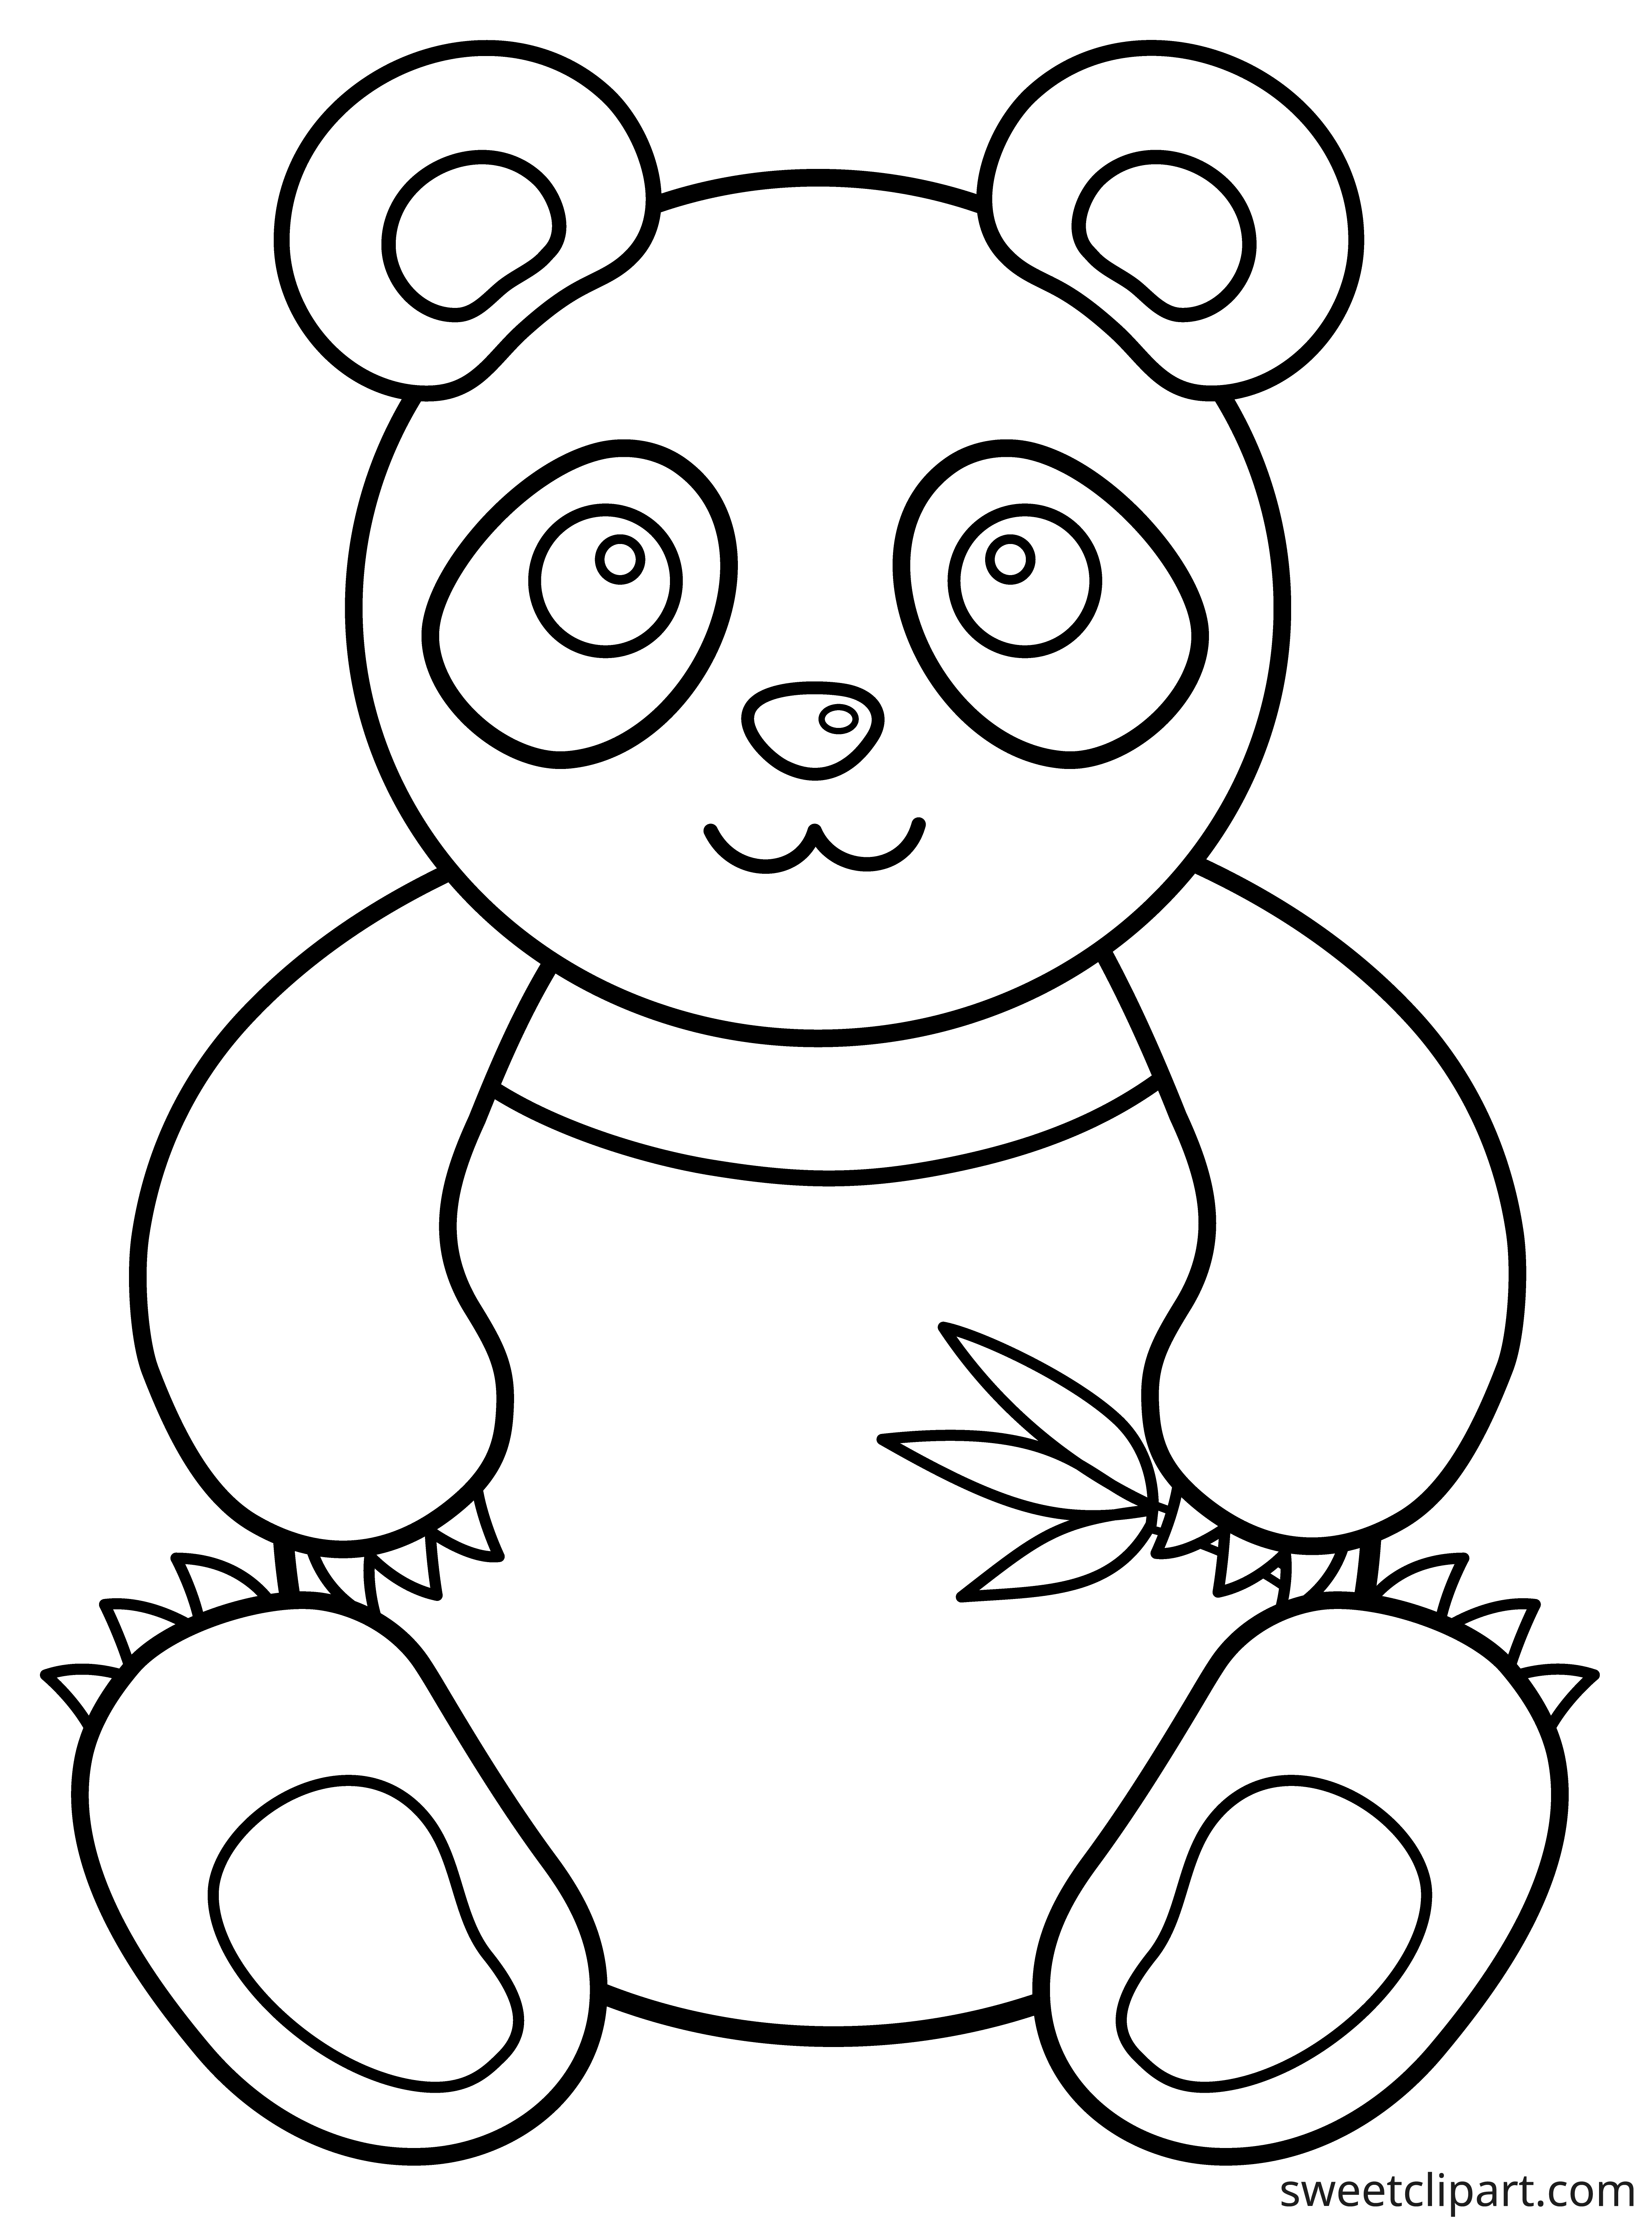 Cute Panda Coloring Page - Sweet Clip Art